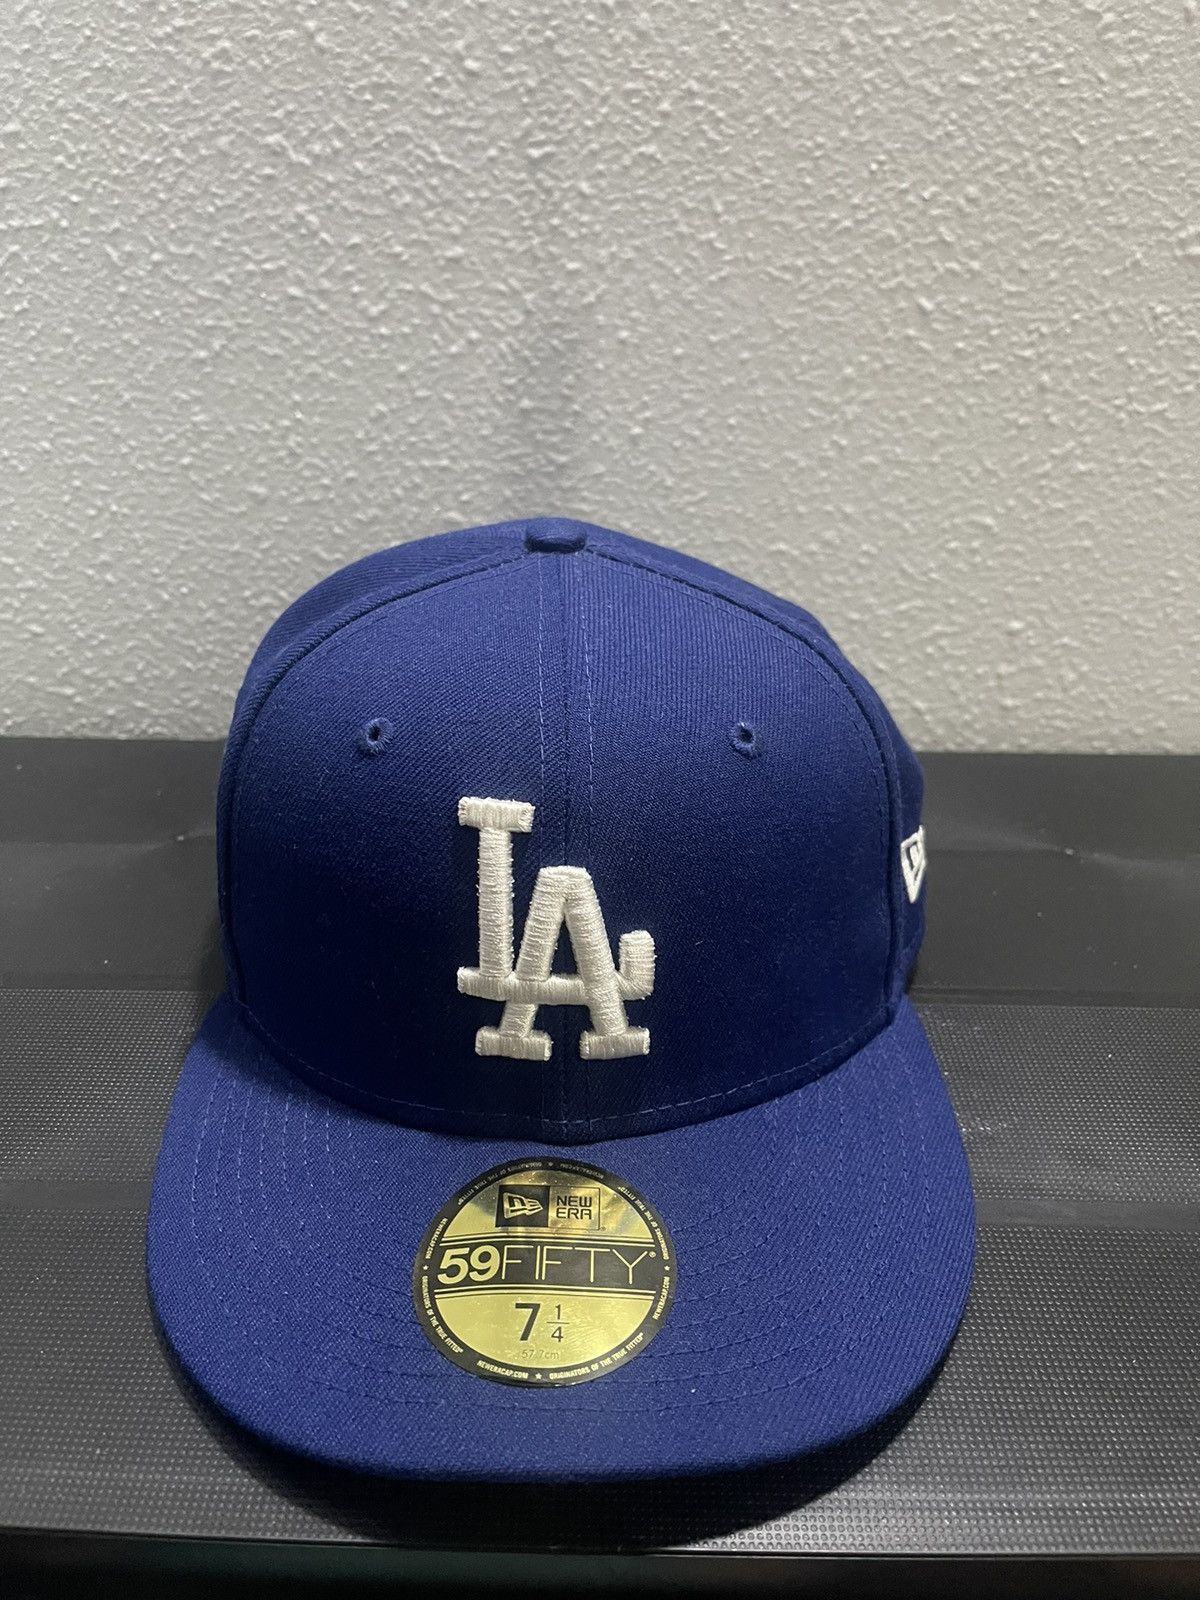 New Era LA Dodgers hat | Grailed